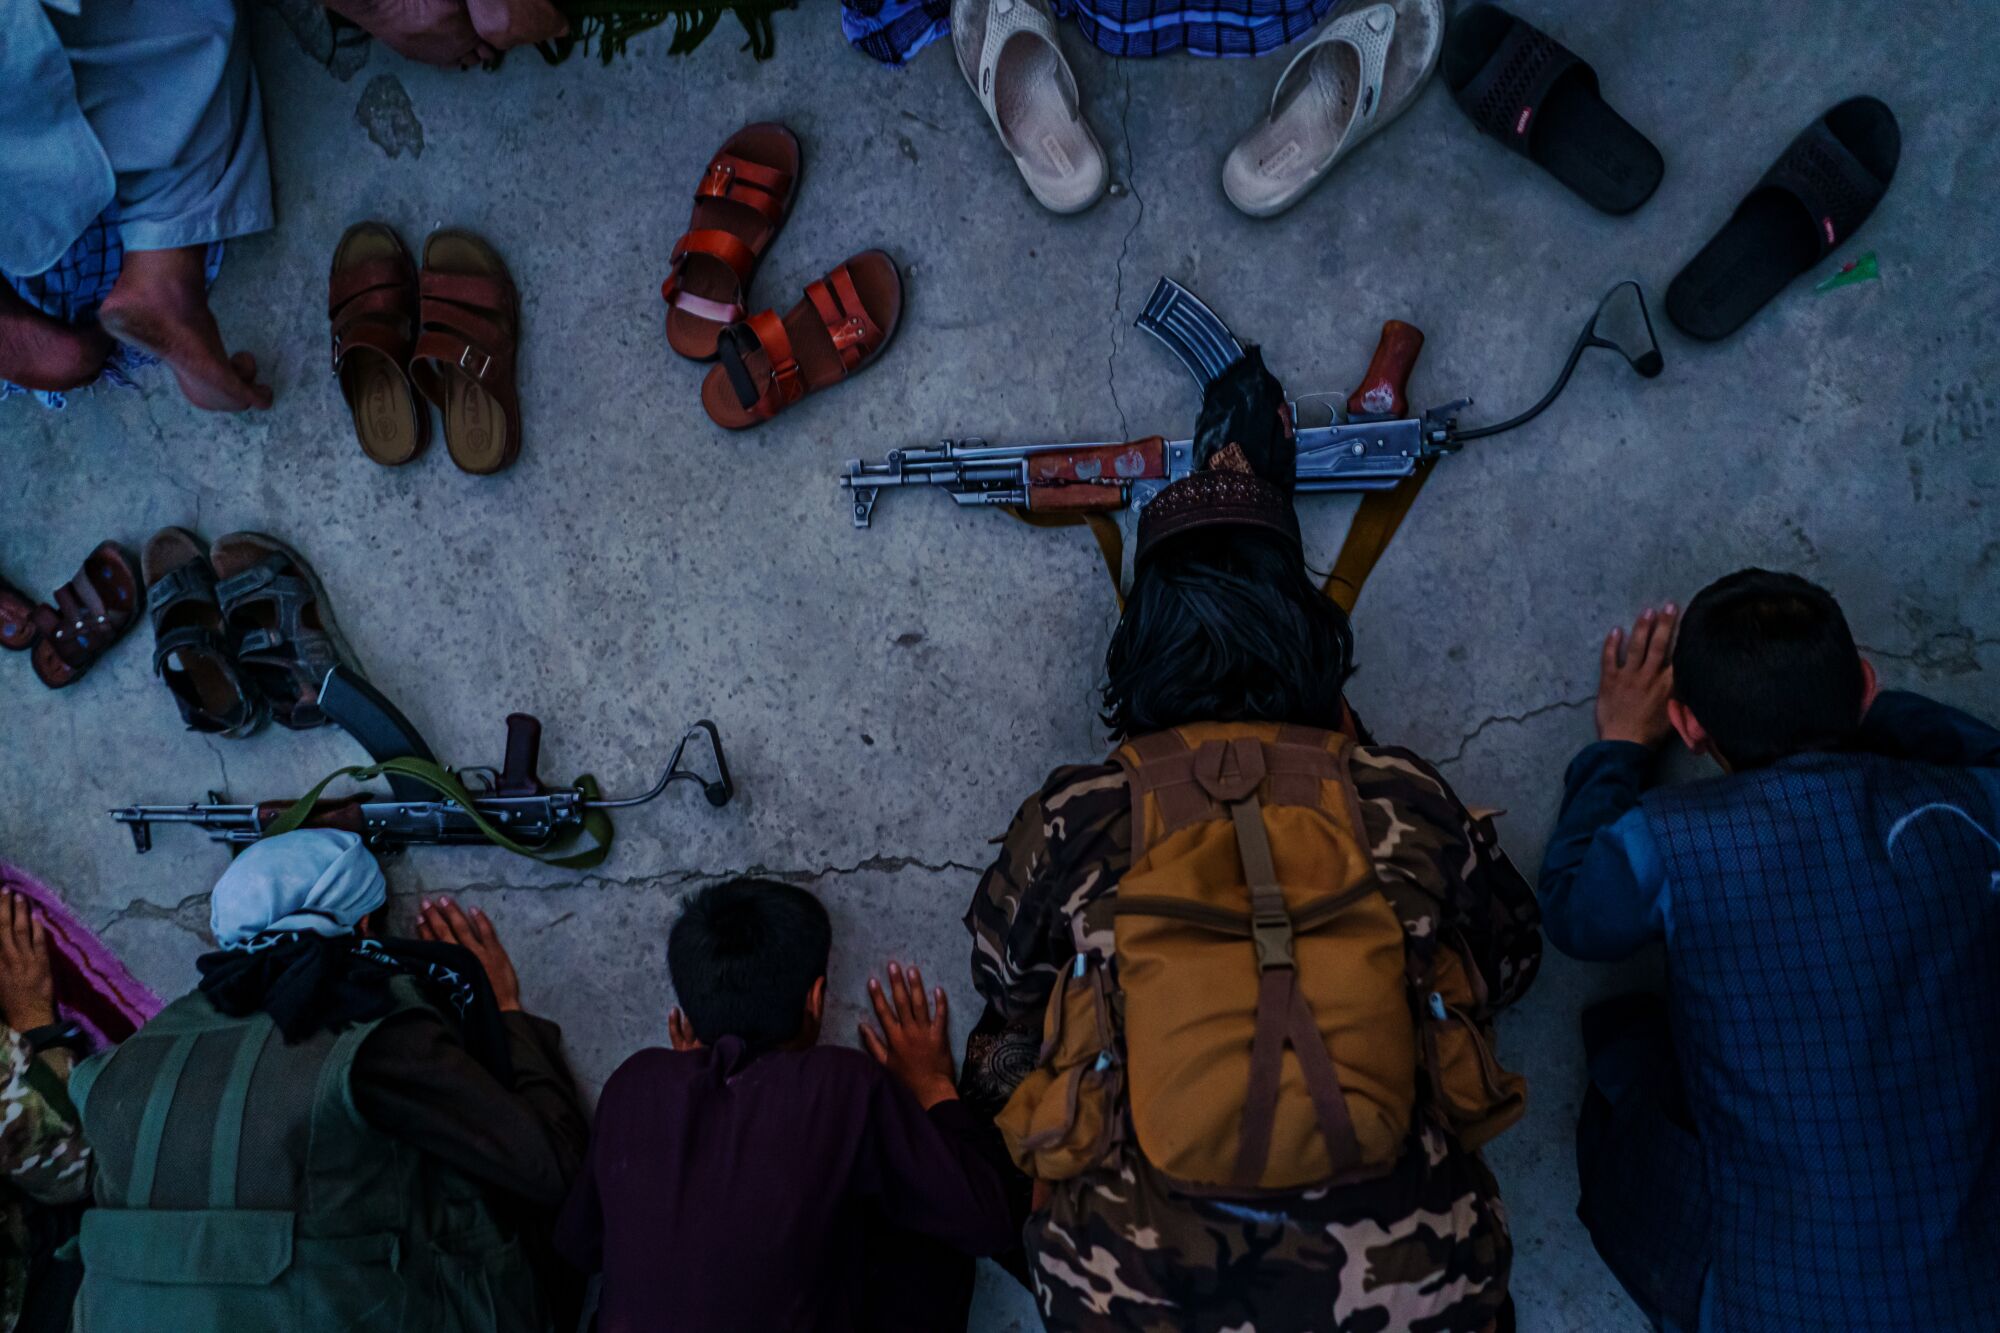 Taliban fighters praying next to civilians